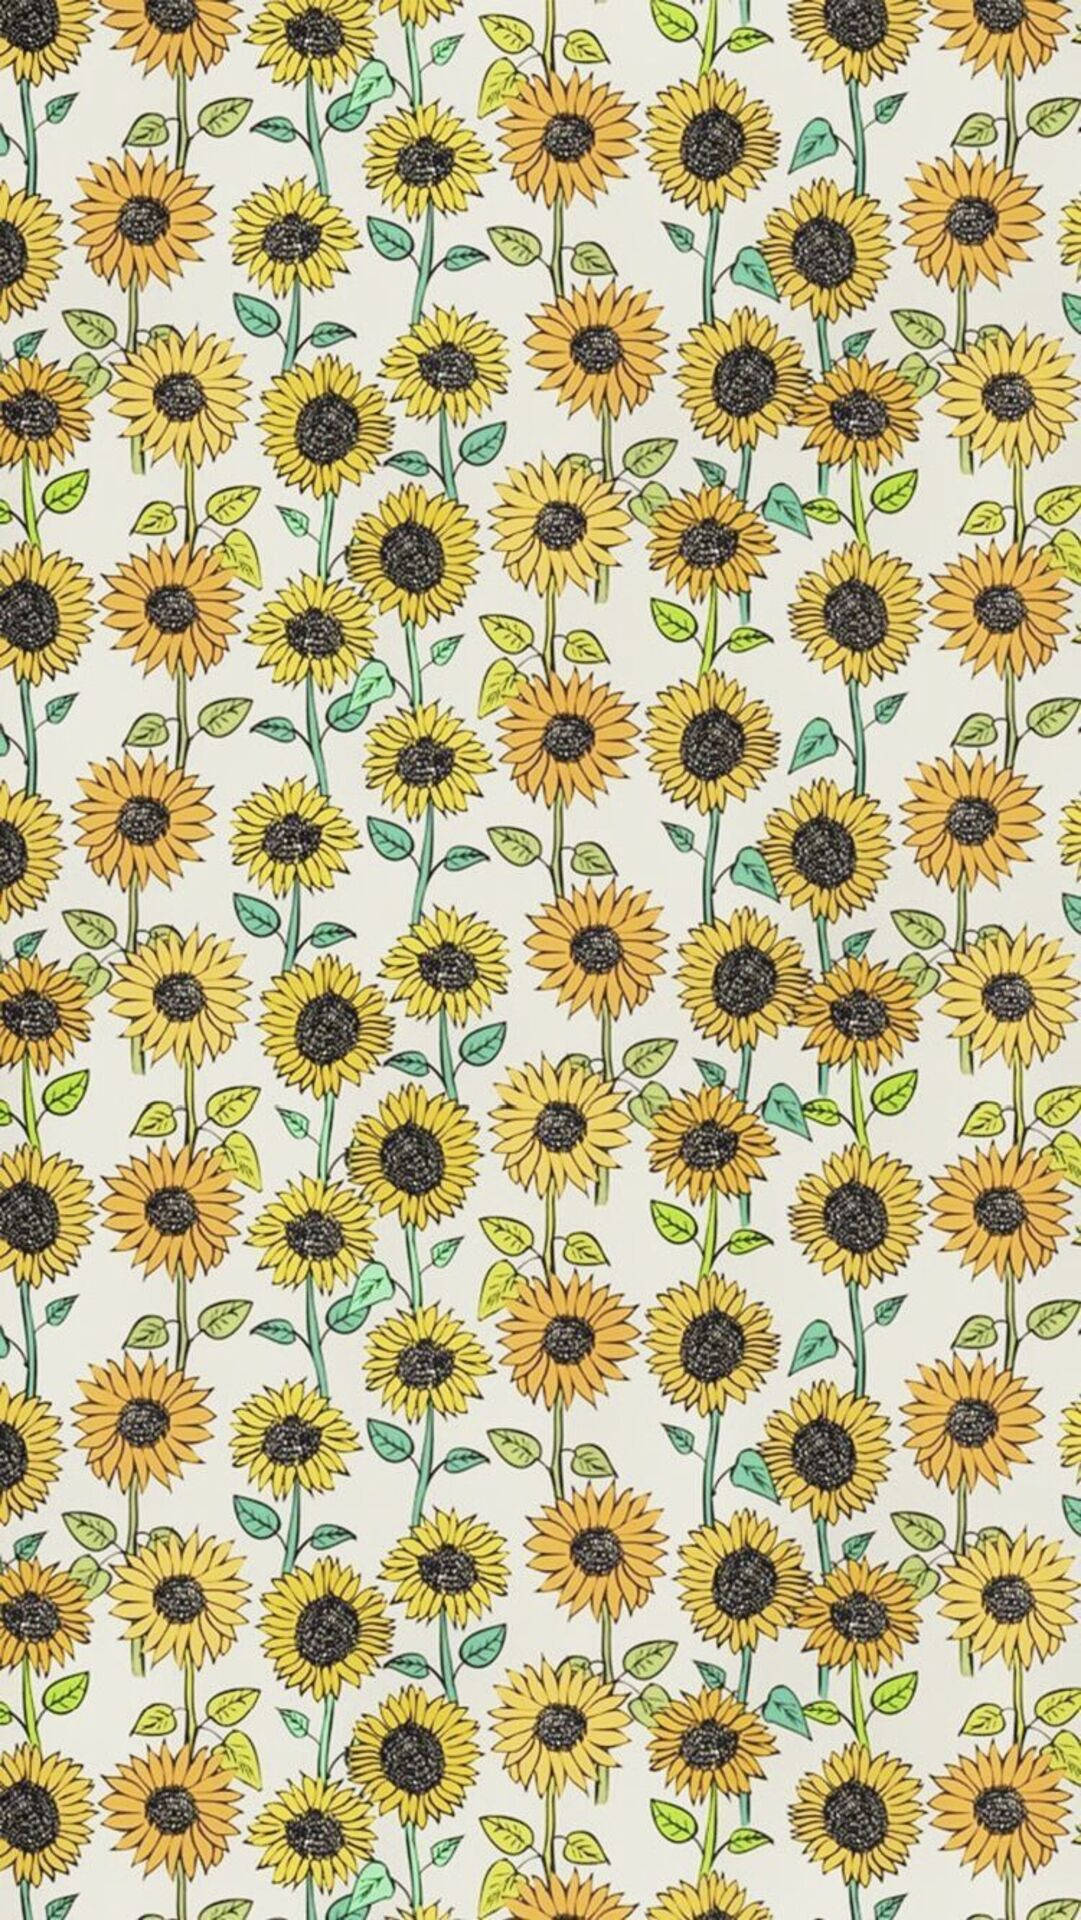 Sunflower Doodle Art Iphone Background